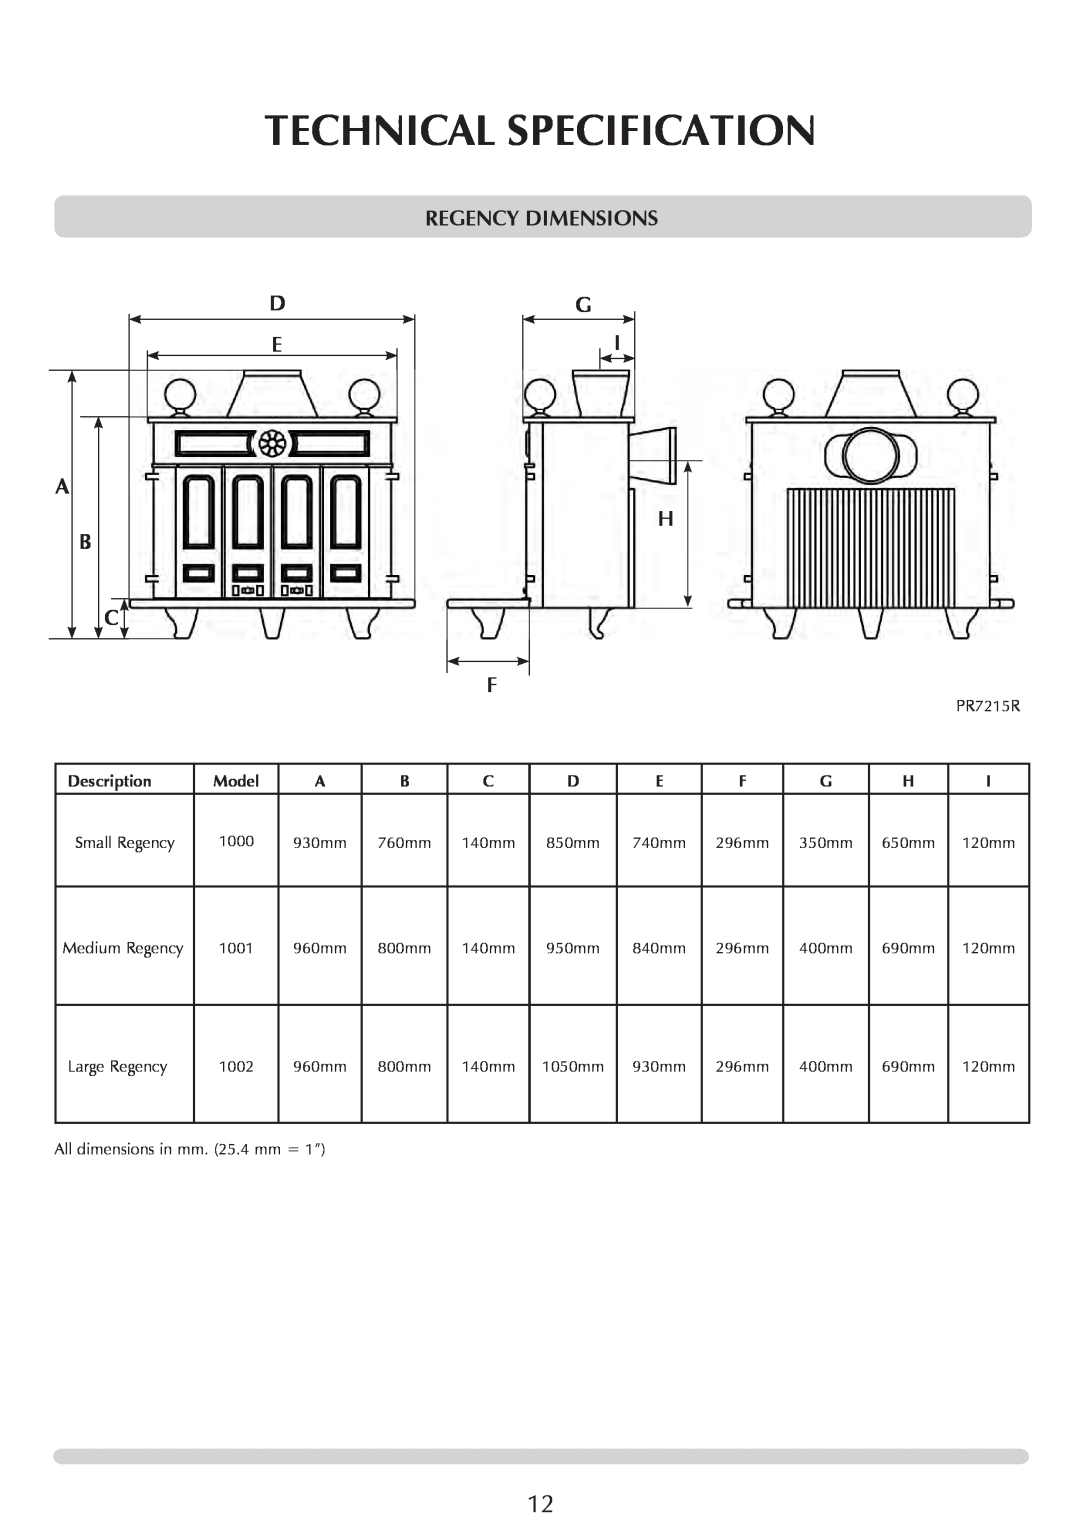 Stovax 1002, 1001, 1000 manual A B C, Regency DIMENSIONS G I H F, Technical Specification, Description, Model 